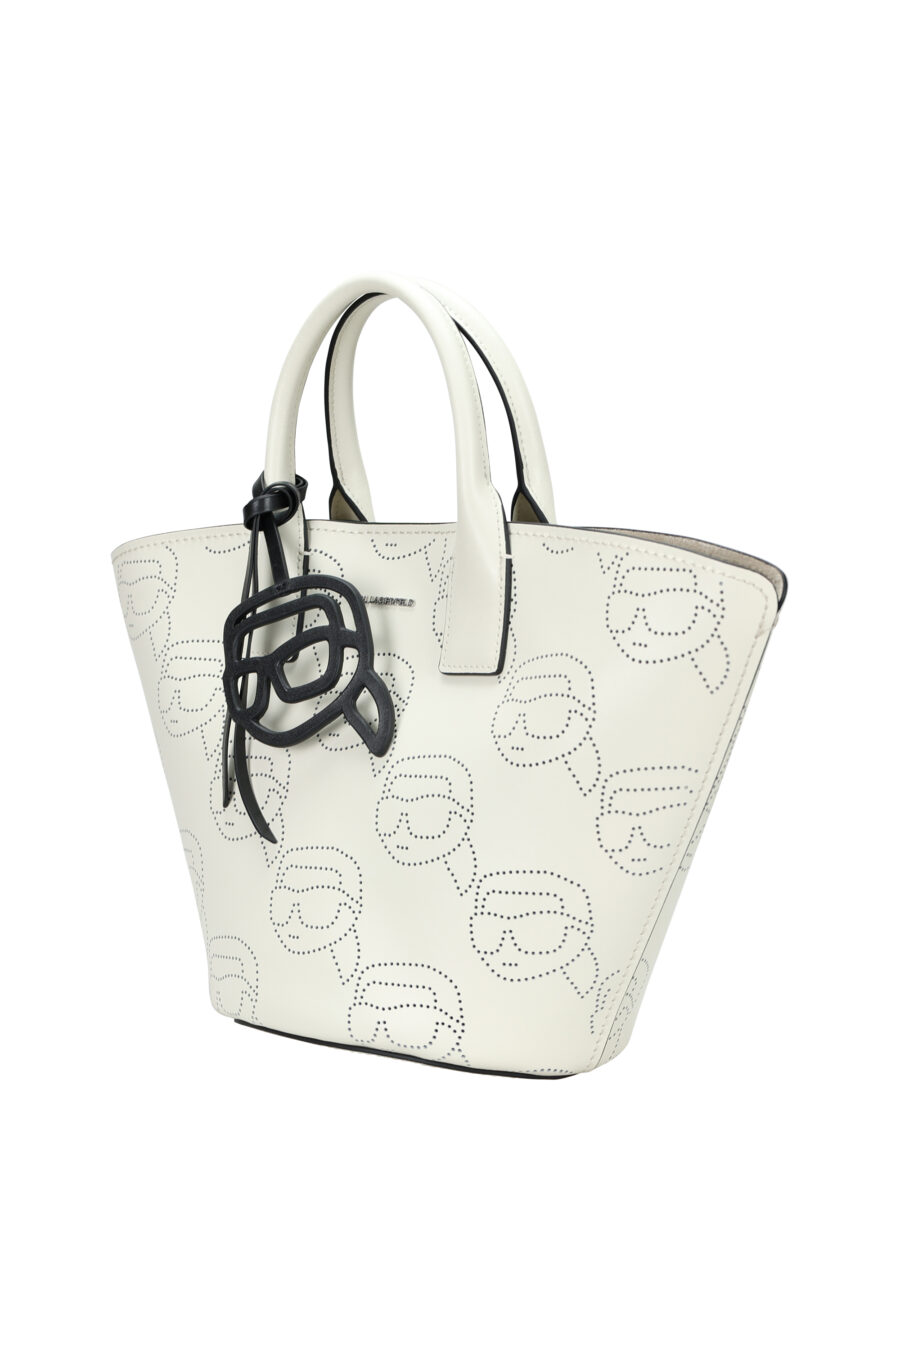 Tote bag mini blanco con karl "all over logo" perforado - 8720744816485 1